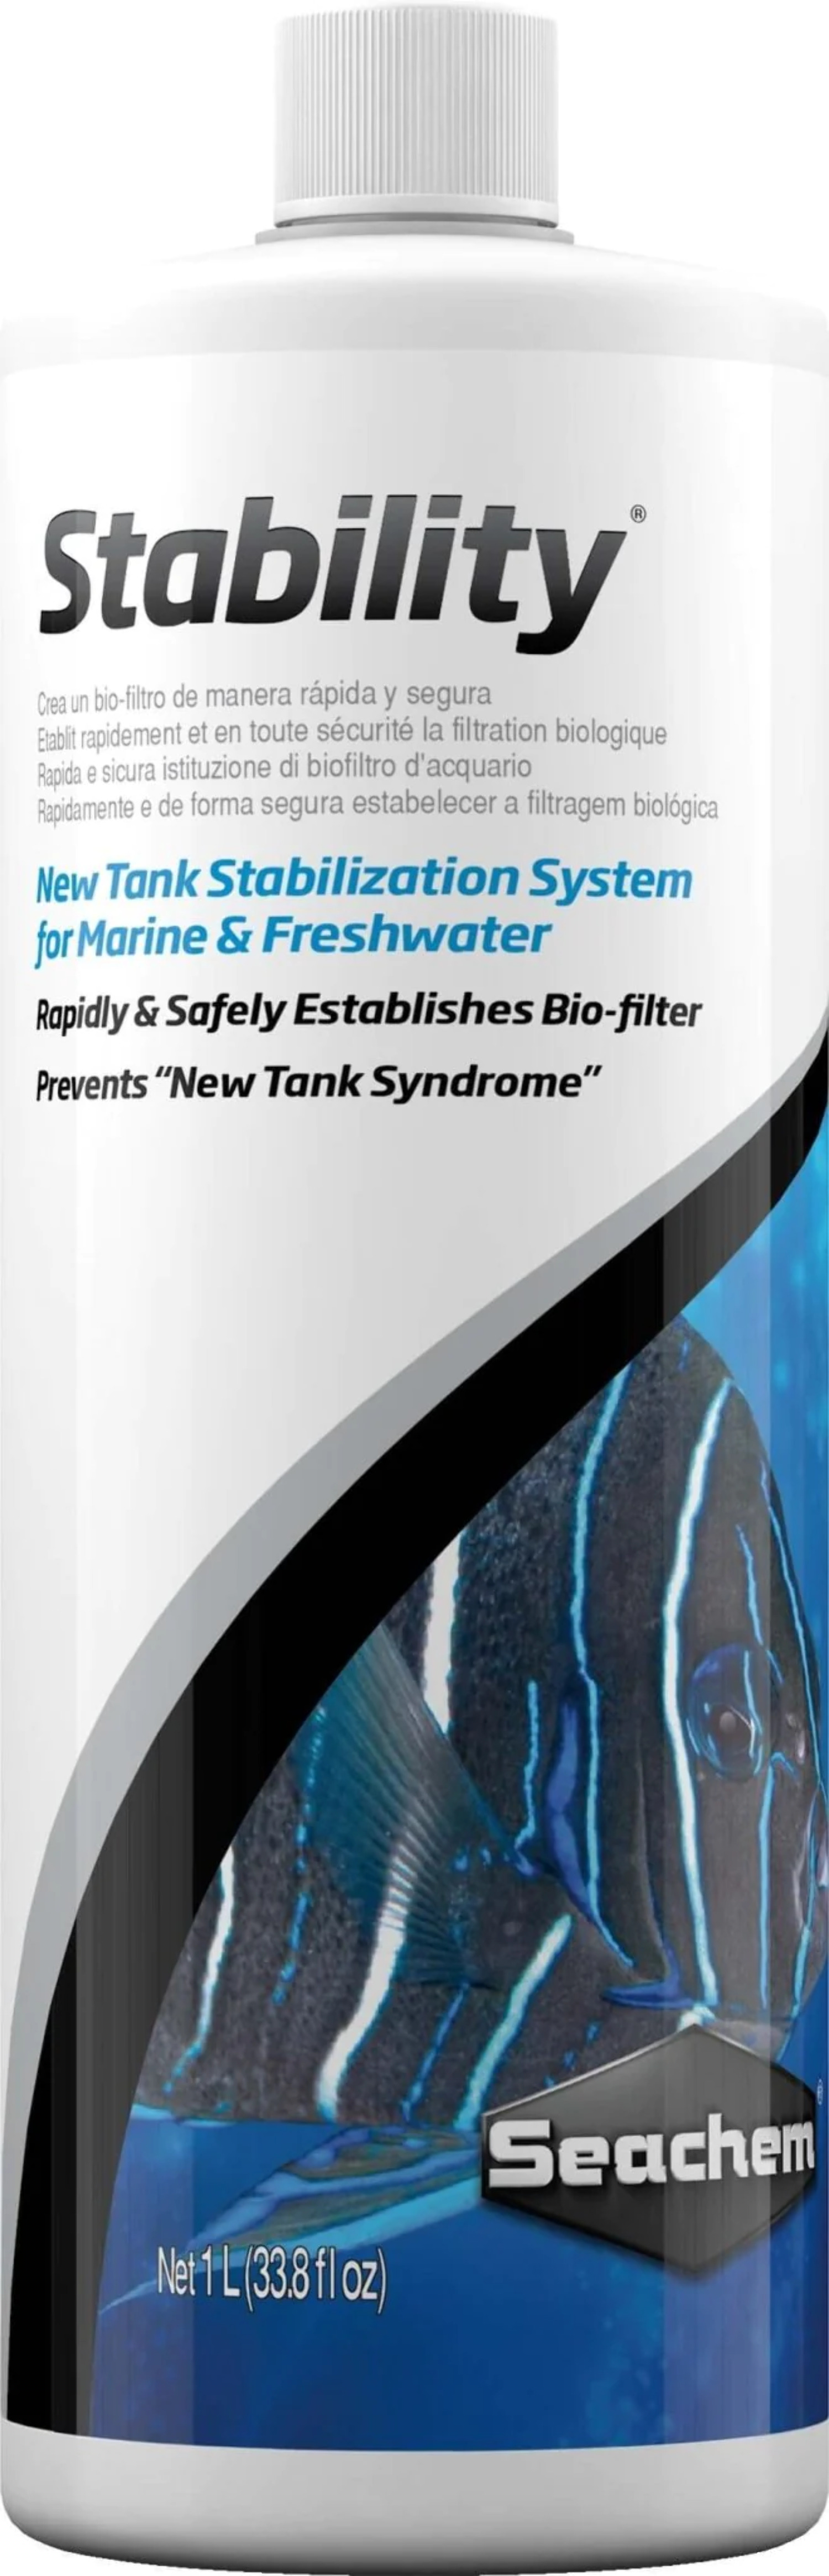 Seachem Stability Fish & Aquatic Life Marine & Freshwater Treatment, 67.6 Oz - image 2 of 3